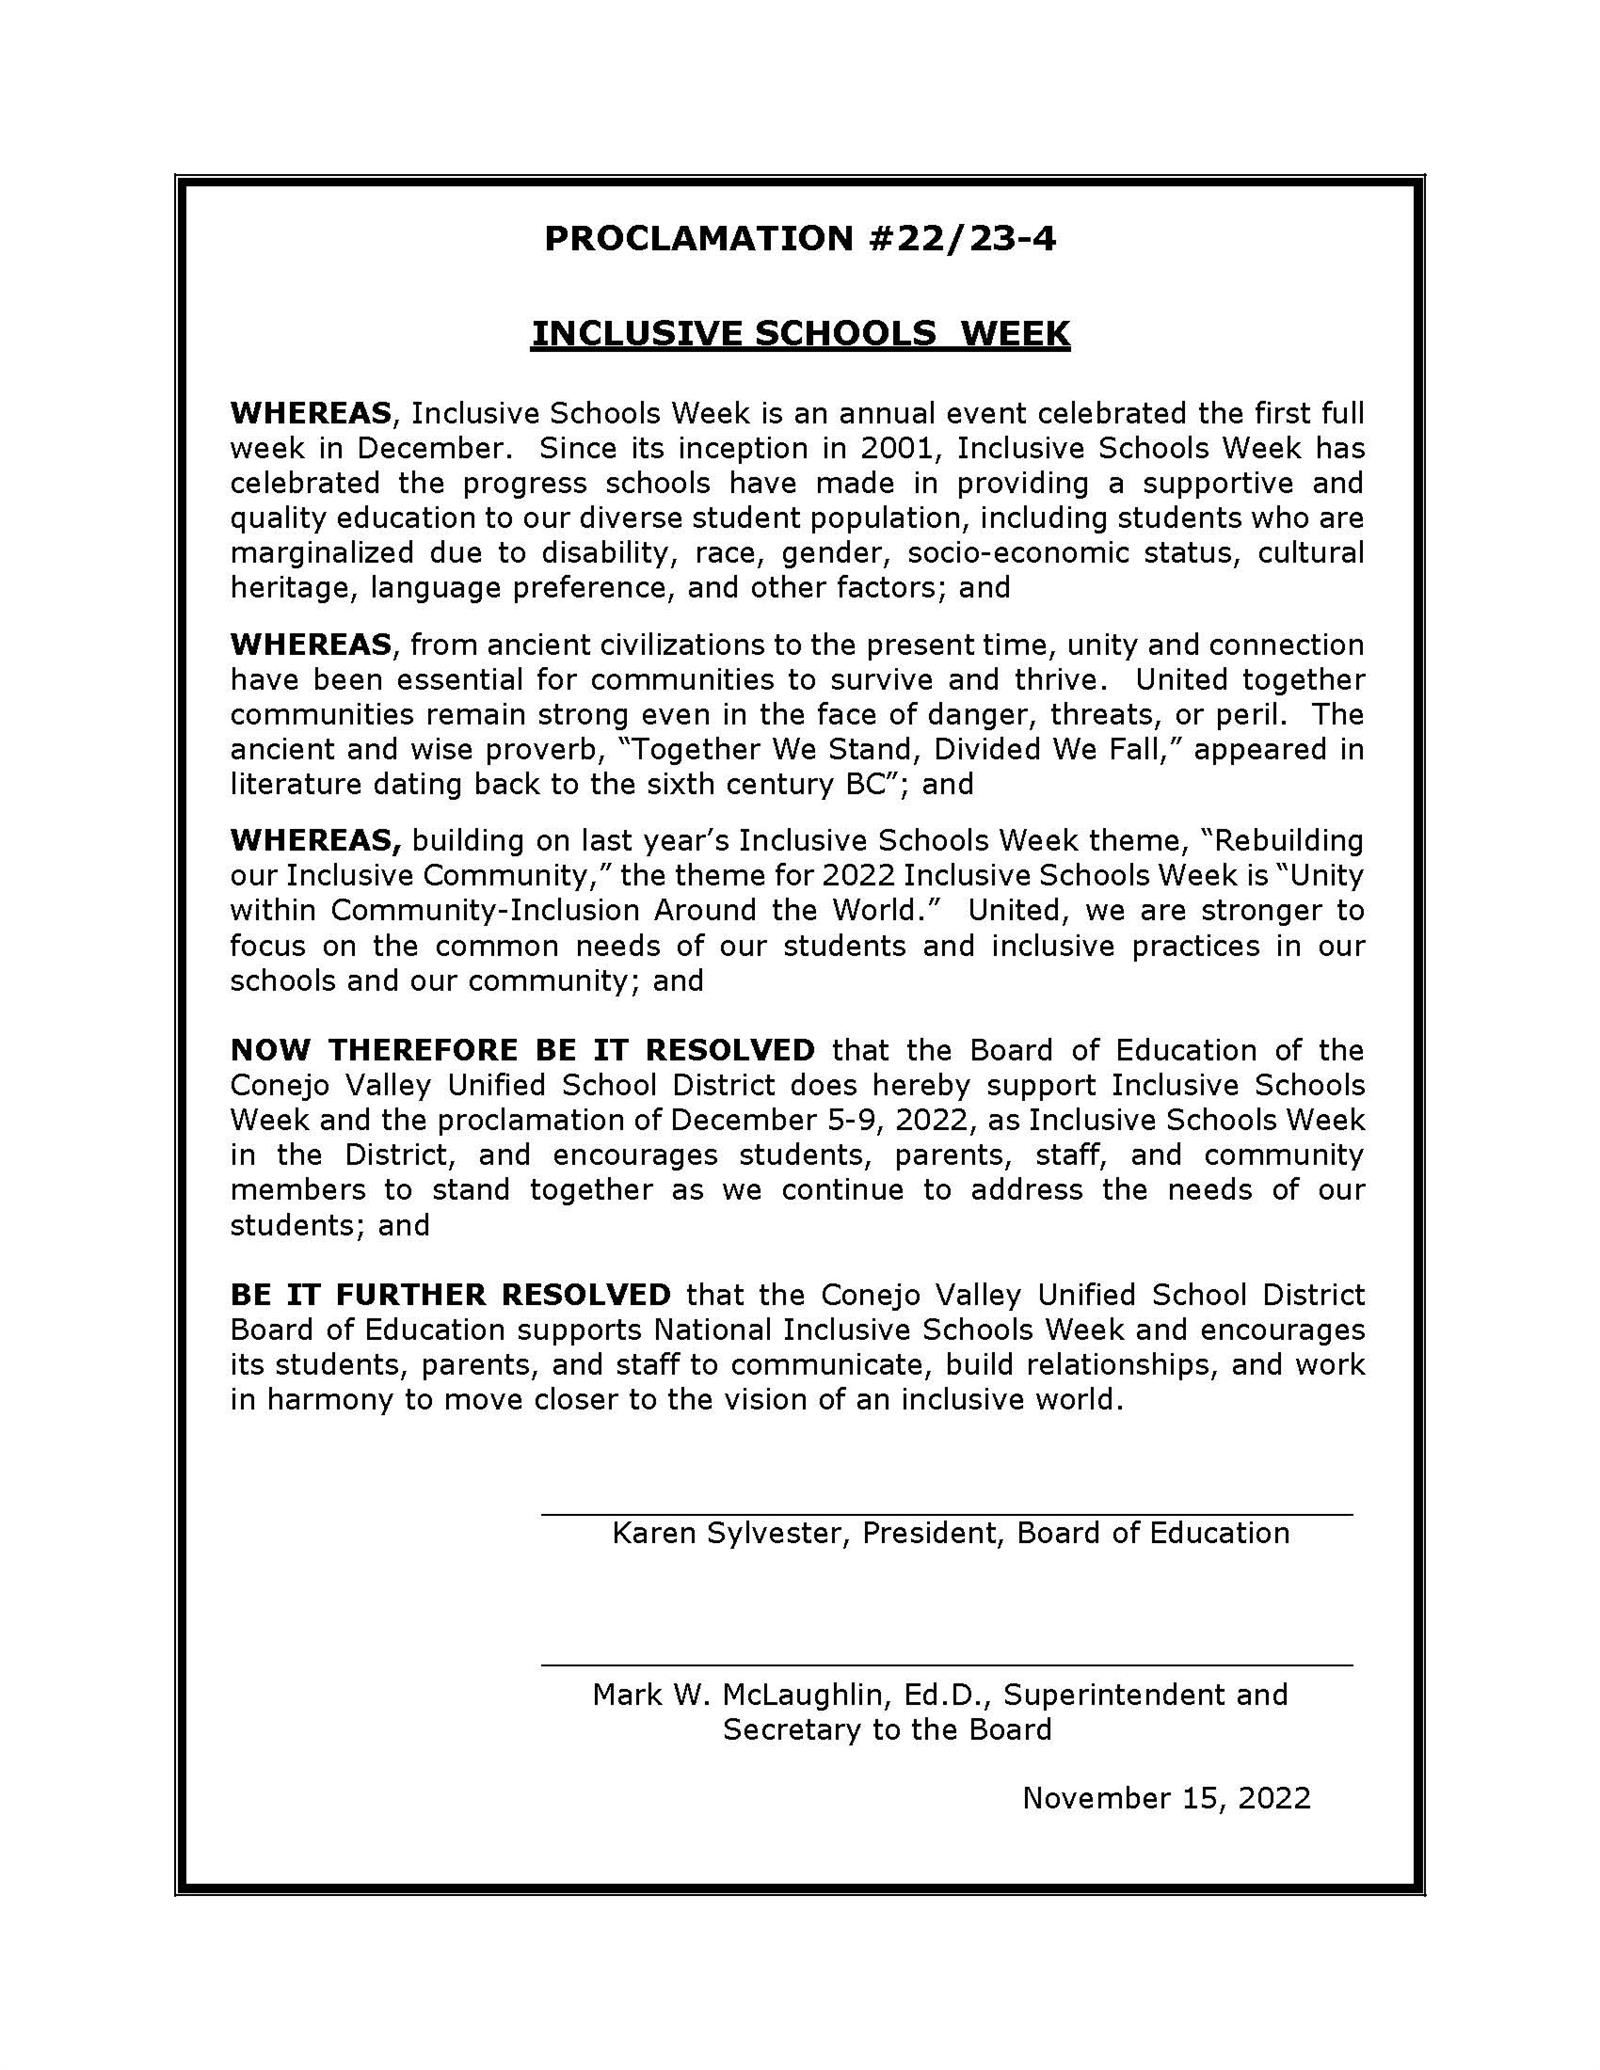 Inclusive Schools Week Proclamation